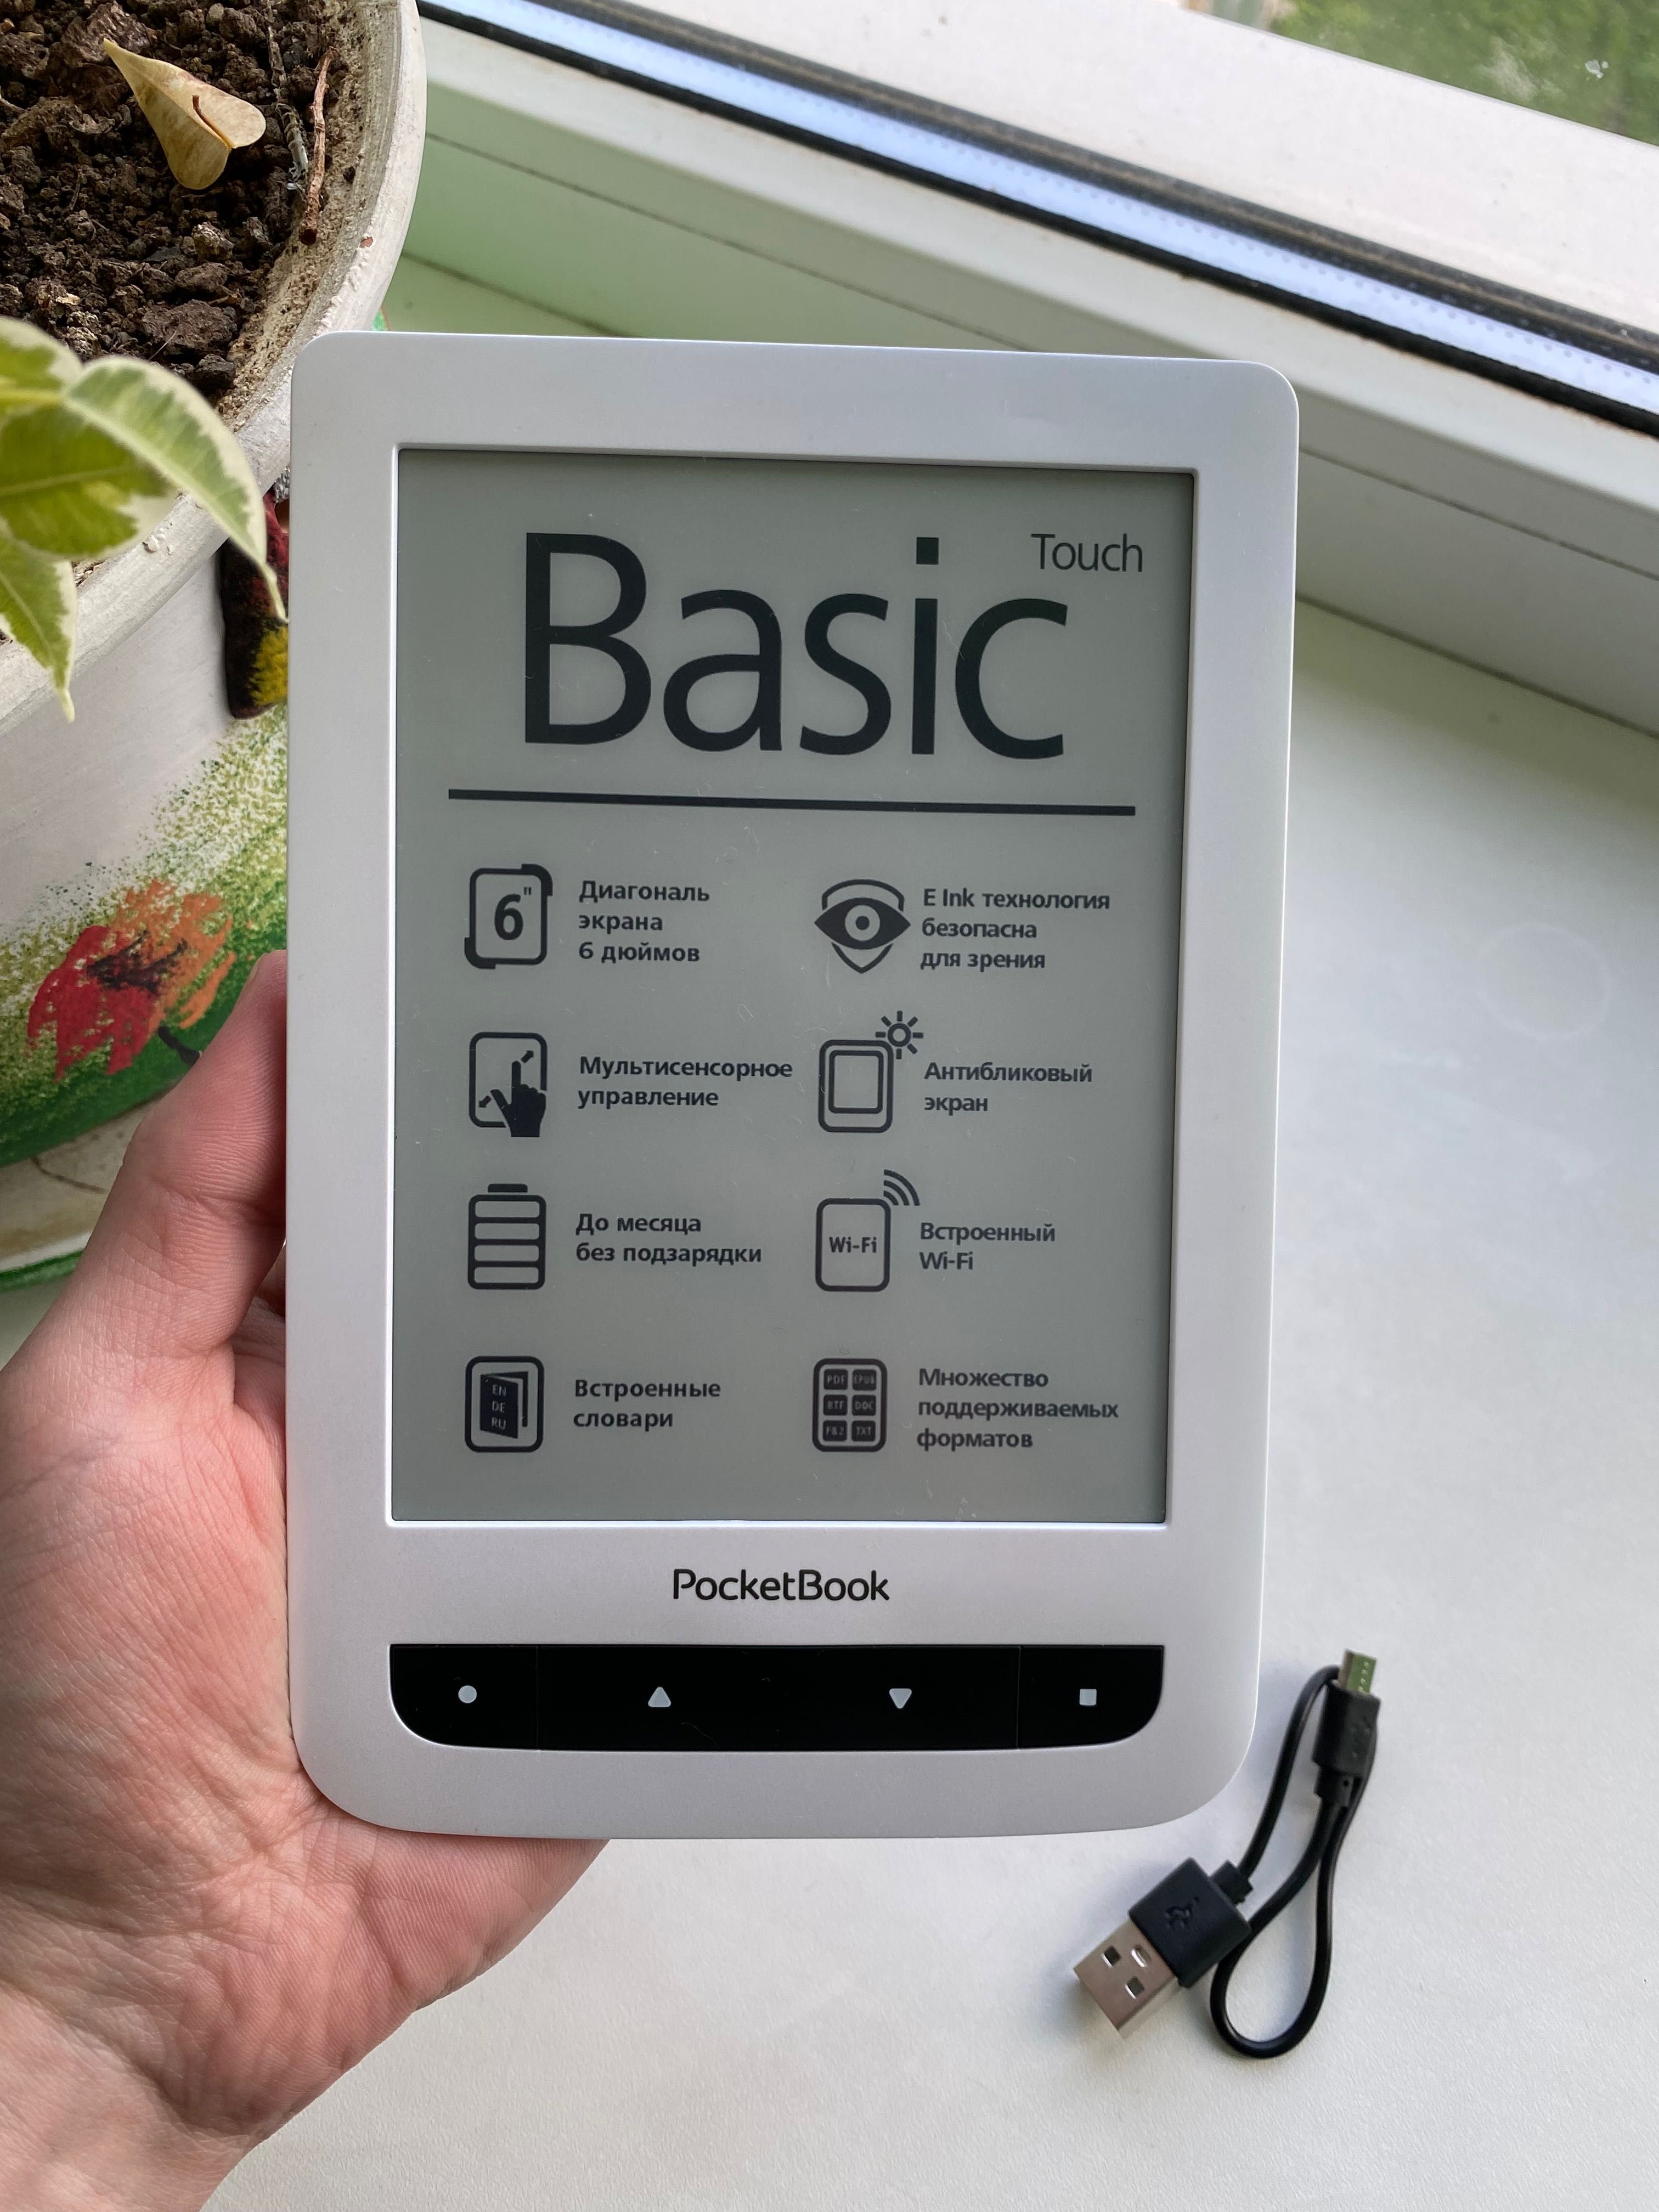 Електронна книжка PocketBook 624 Basic Touch сенсорна